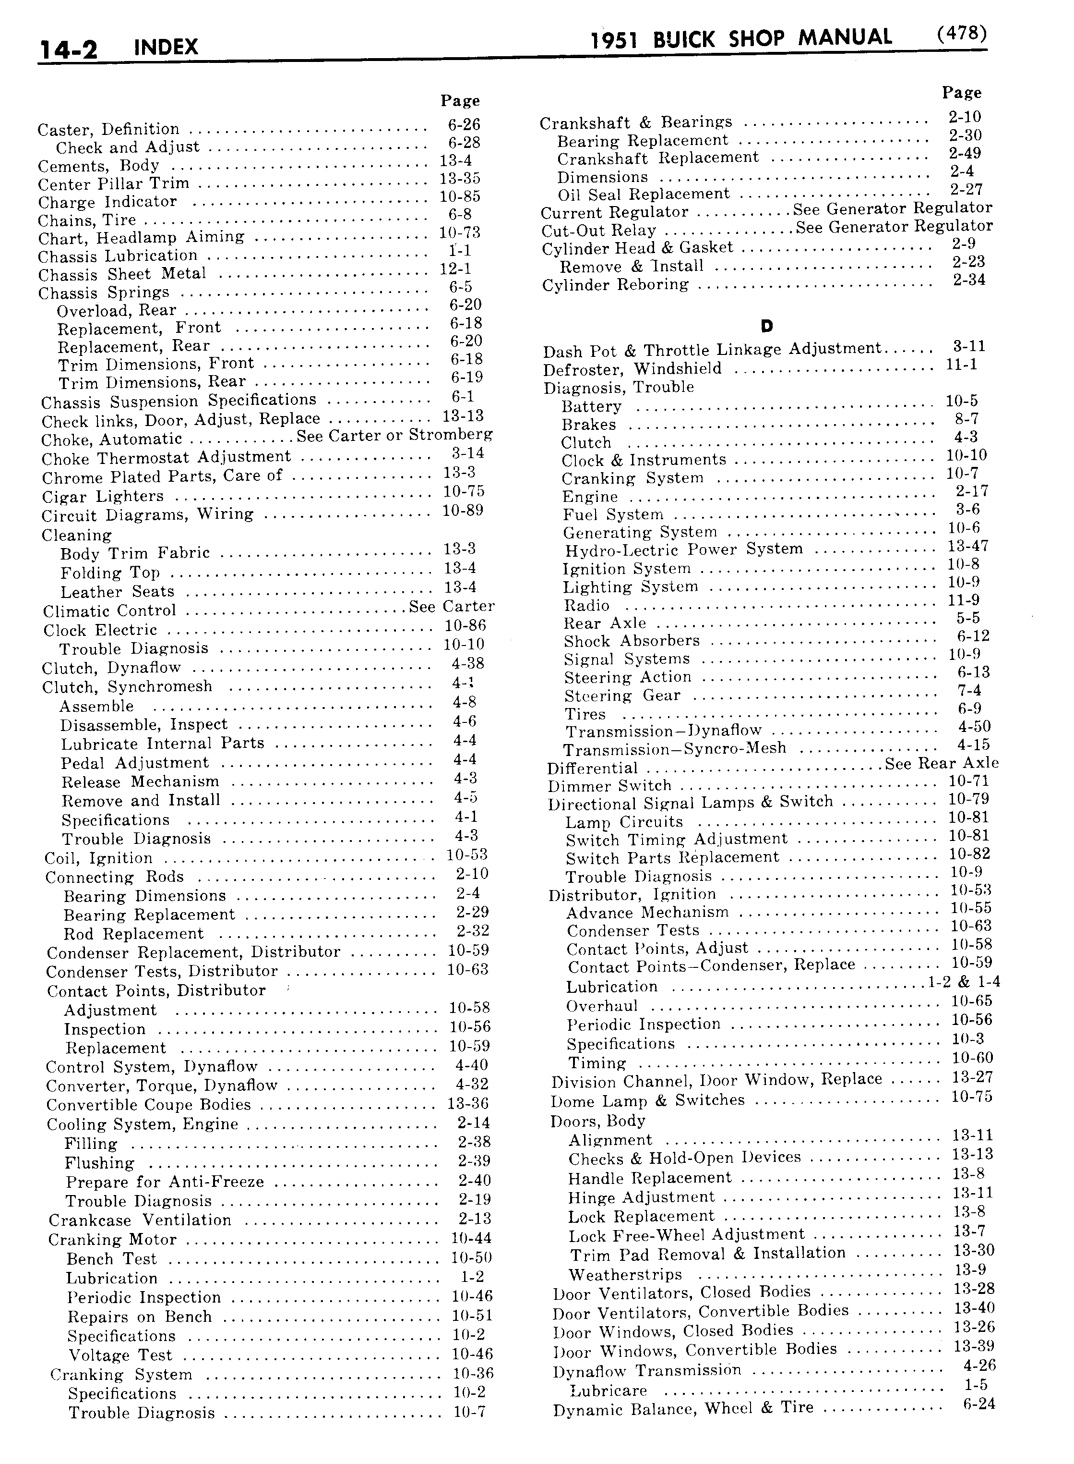 n_15 1951 Buick Shop Manual - Index-002-002.jpg